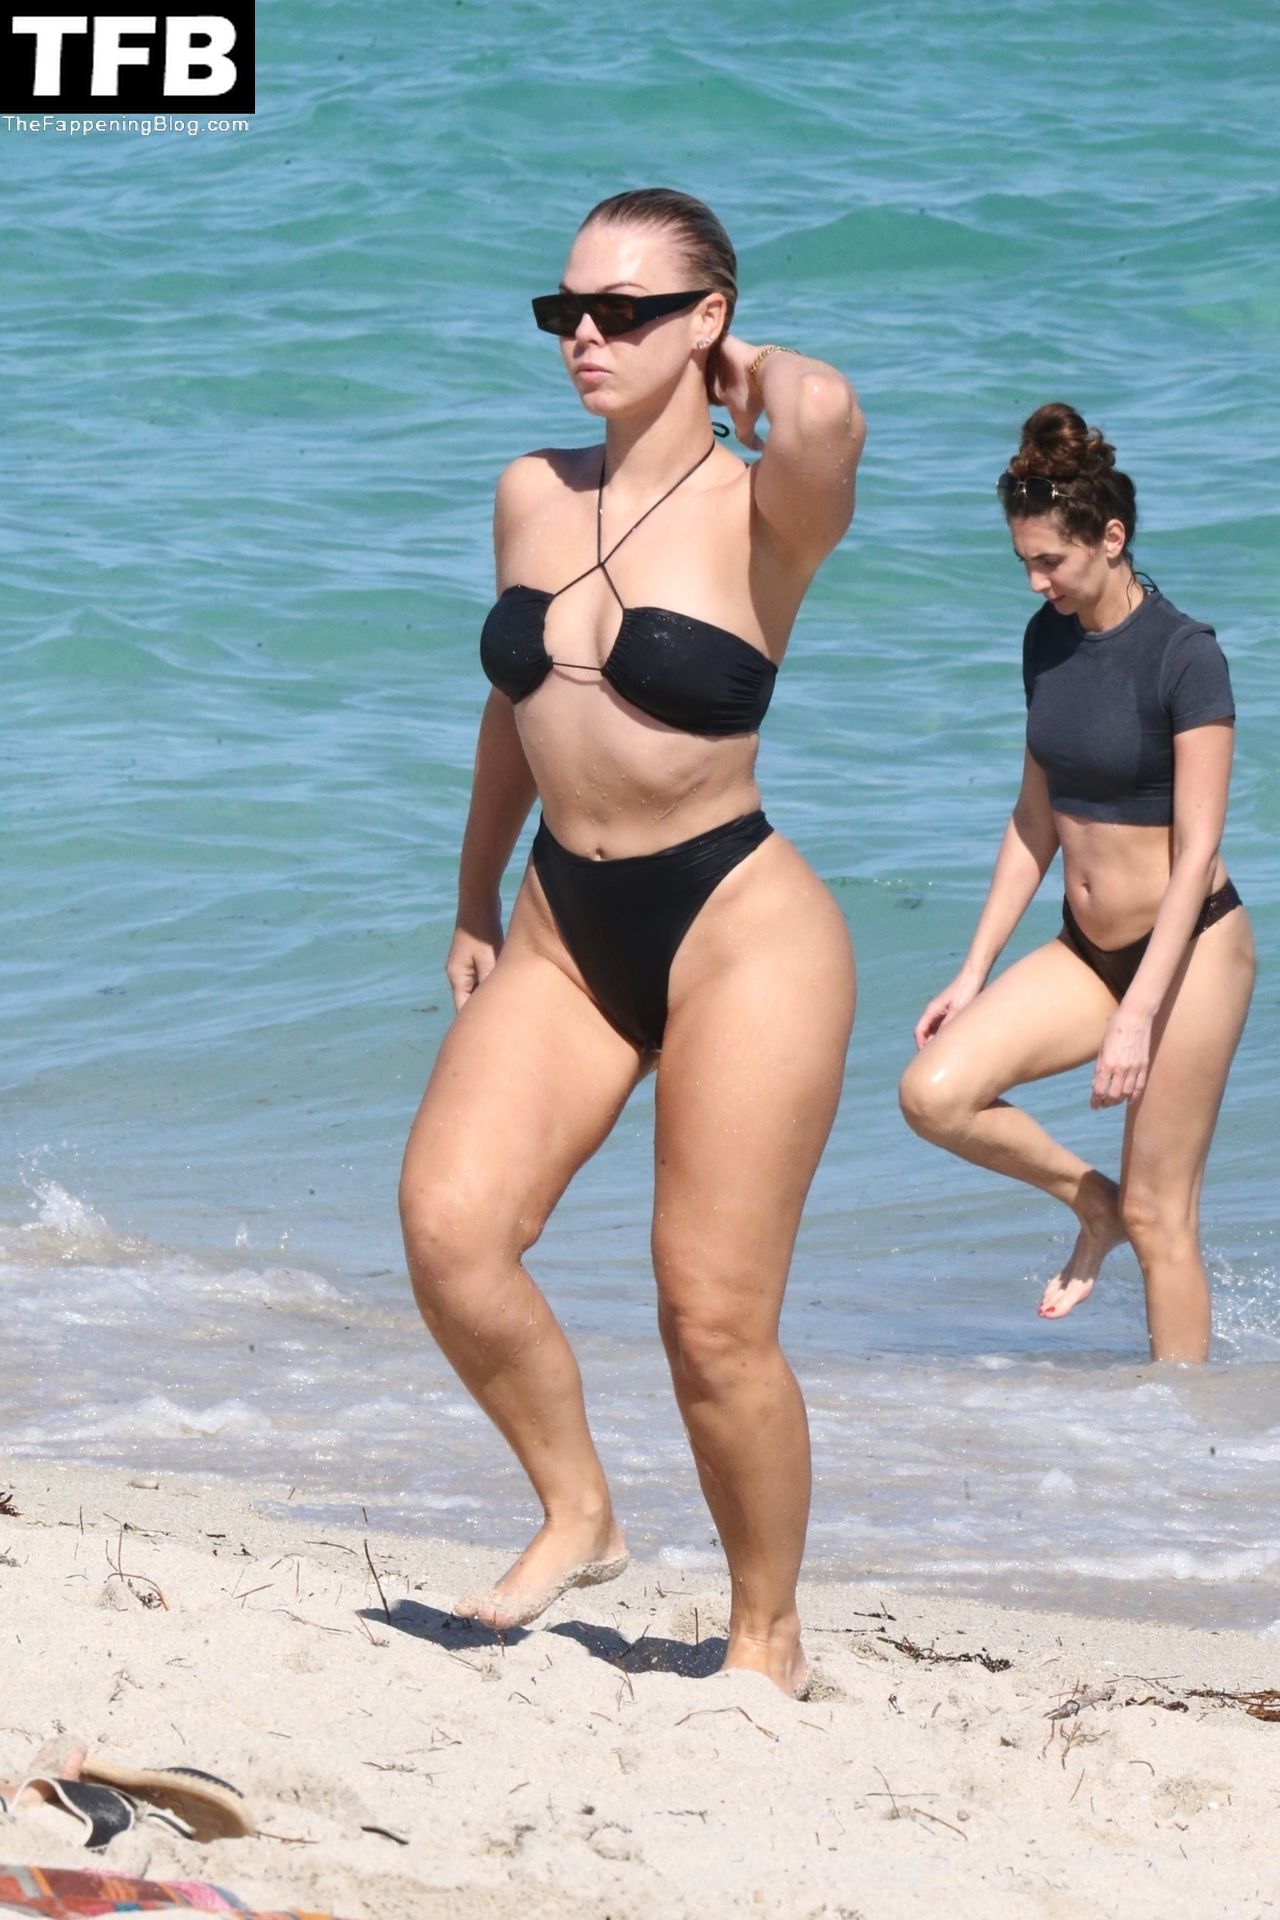 Bianca Elouise on Beach Bikini 1